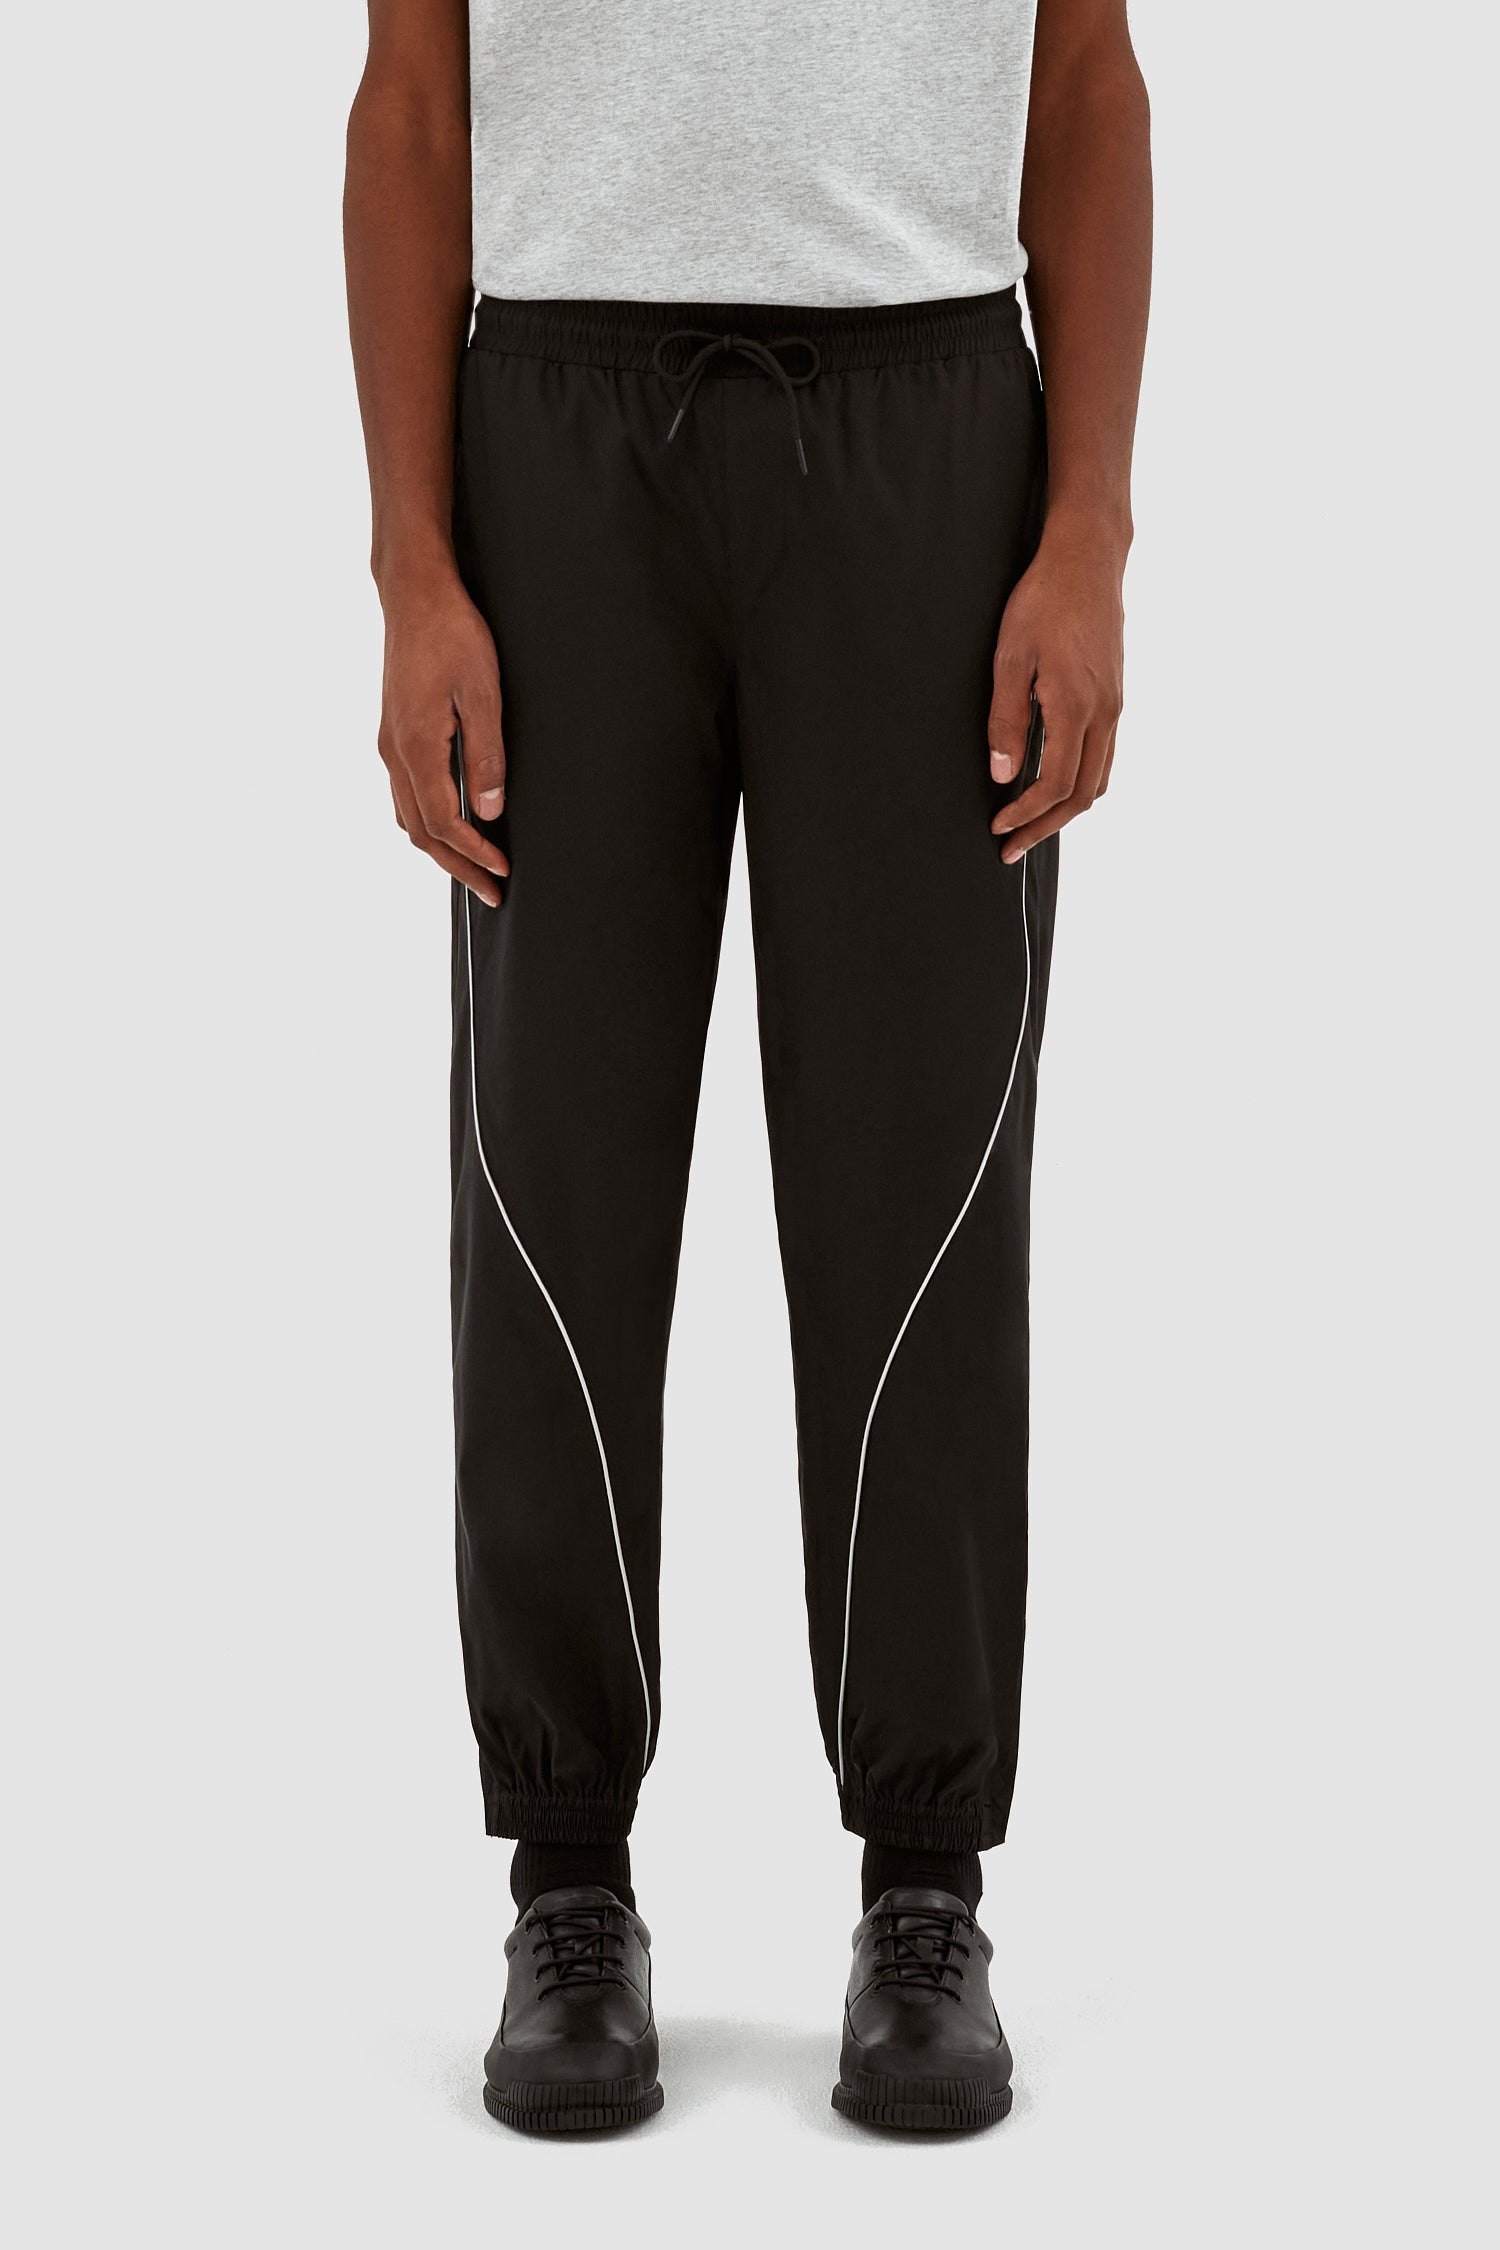 Jordan AW23 Pants - Black/Grey